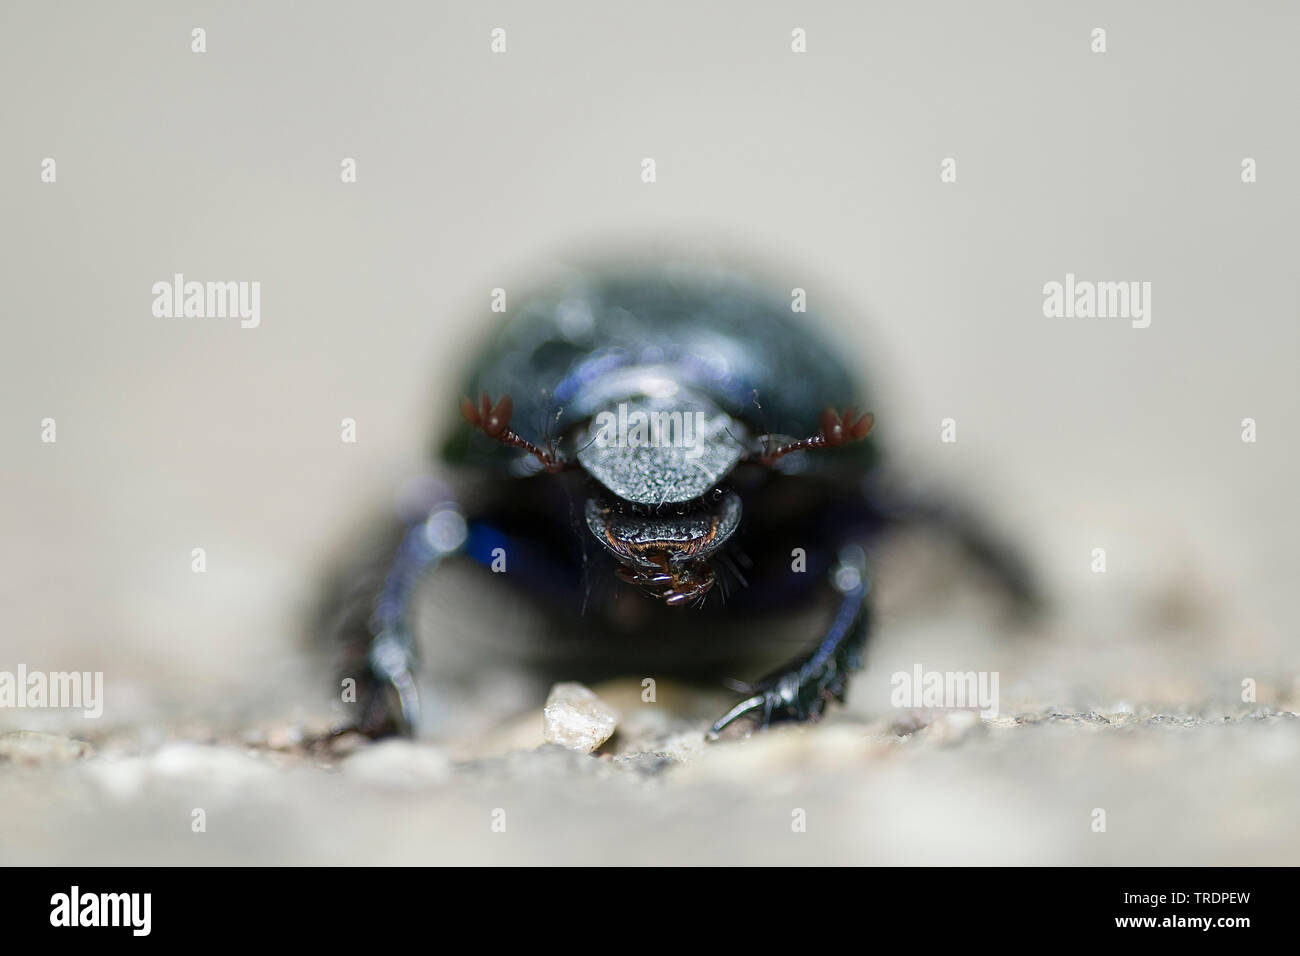 dung beetles (Geotrupidae), Closeup of the head of a dun beetle, Hungary Stock Photo